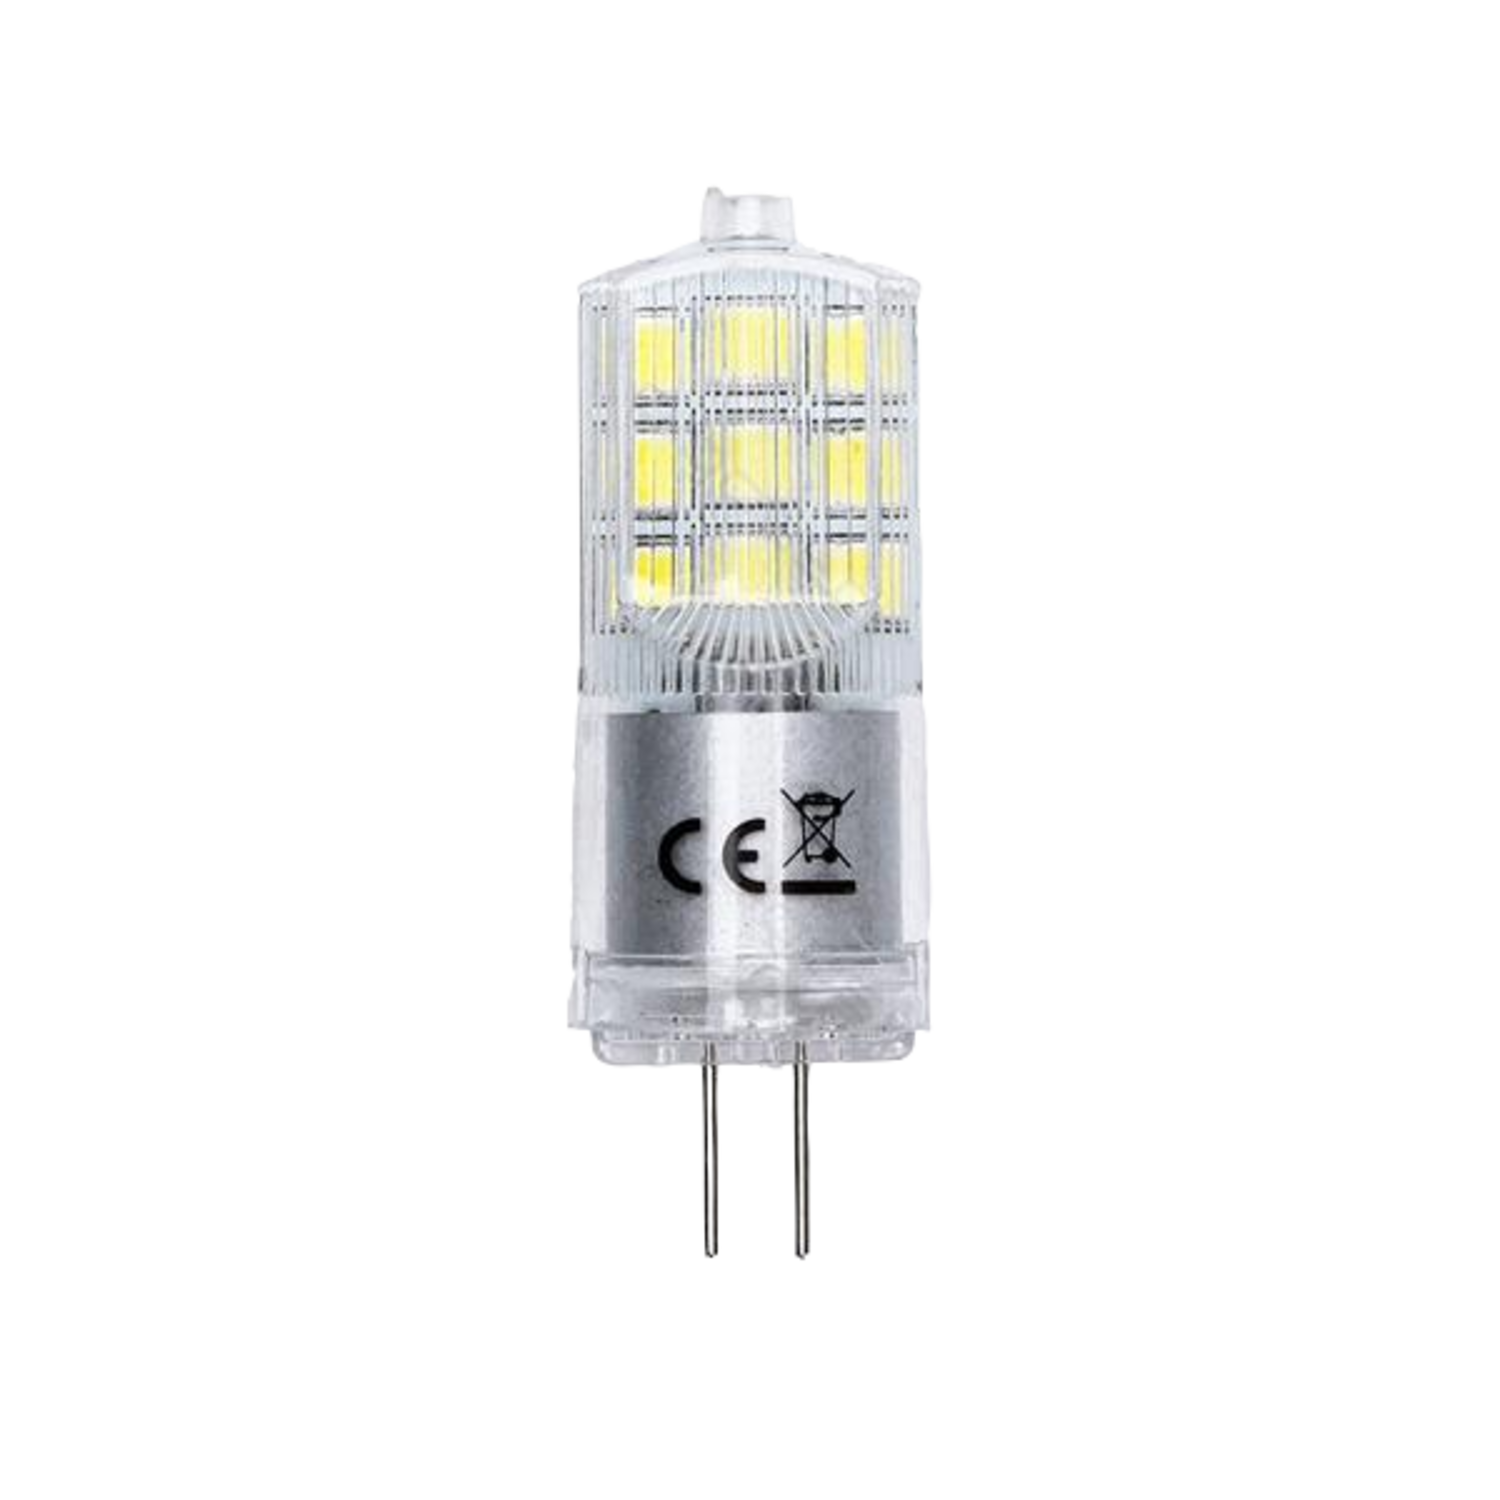 Beschrijvend stel je voor Buitenboordmotor LED G4 - 3W vervangt 26W - 3000K warm wit licht - 46x16mm -  Ledlichtdiscounter.nl